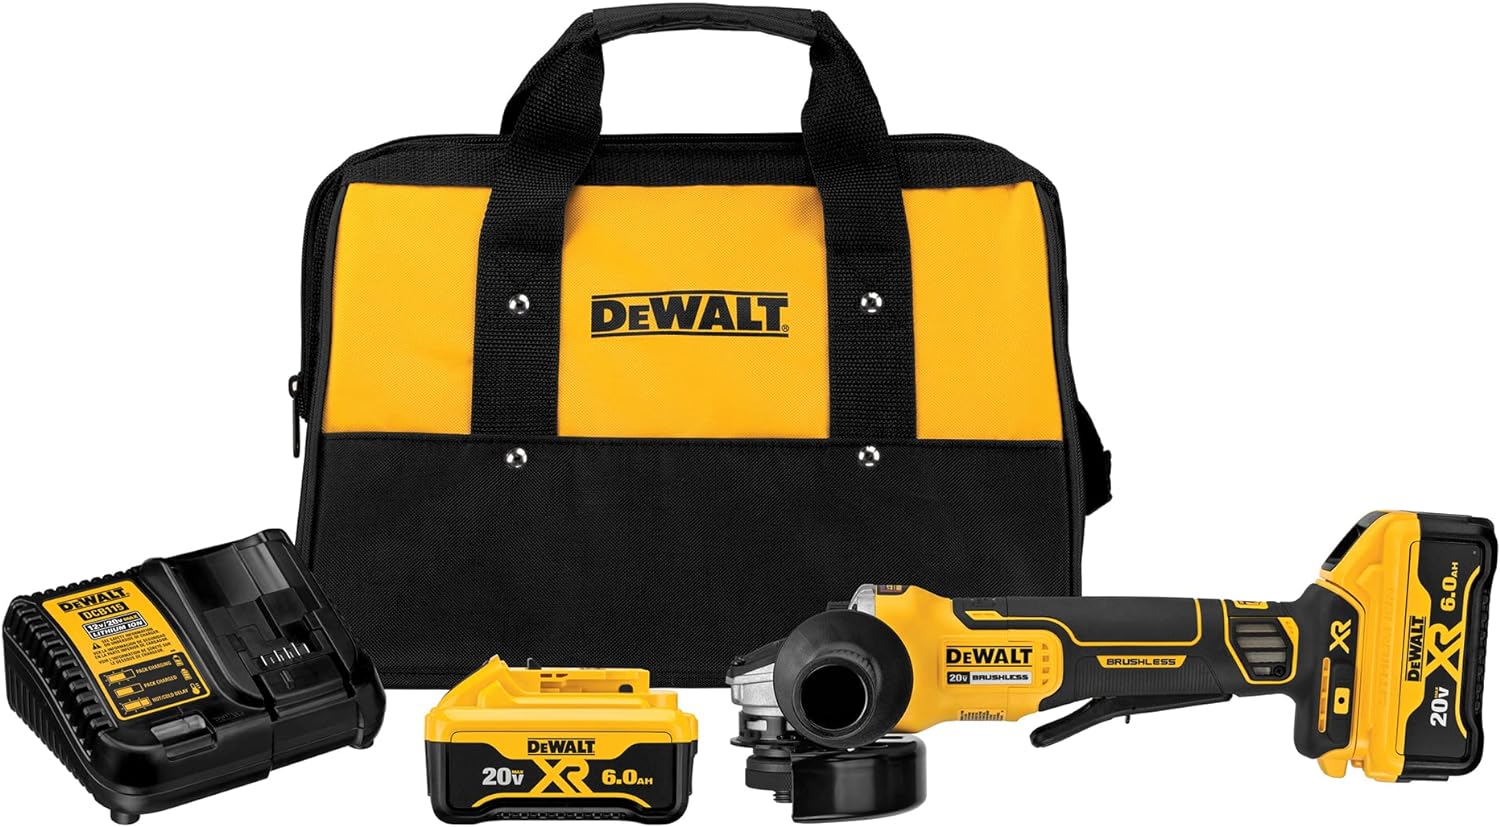 DEWALT 20V MAX* Angle Grinder Tool Kit, 4-1/2-Inch, Paddle Switch with Brake (DCG413R2)